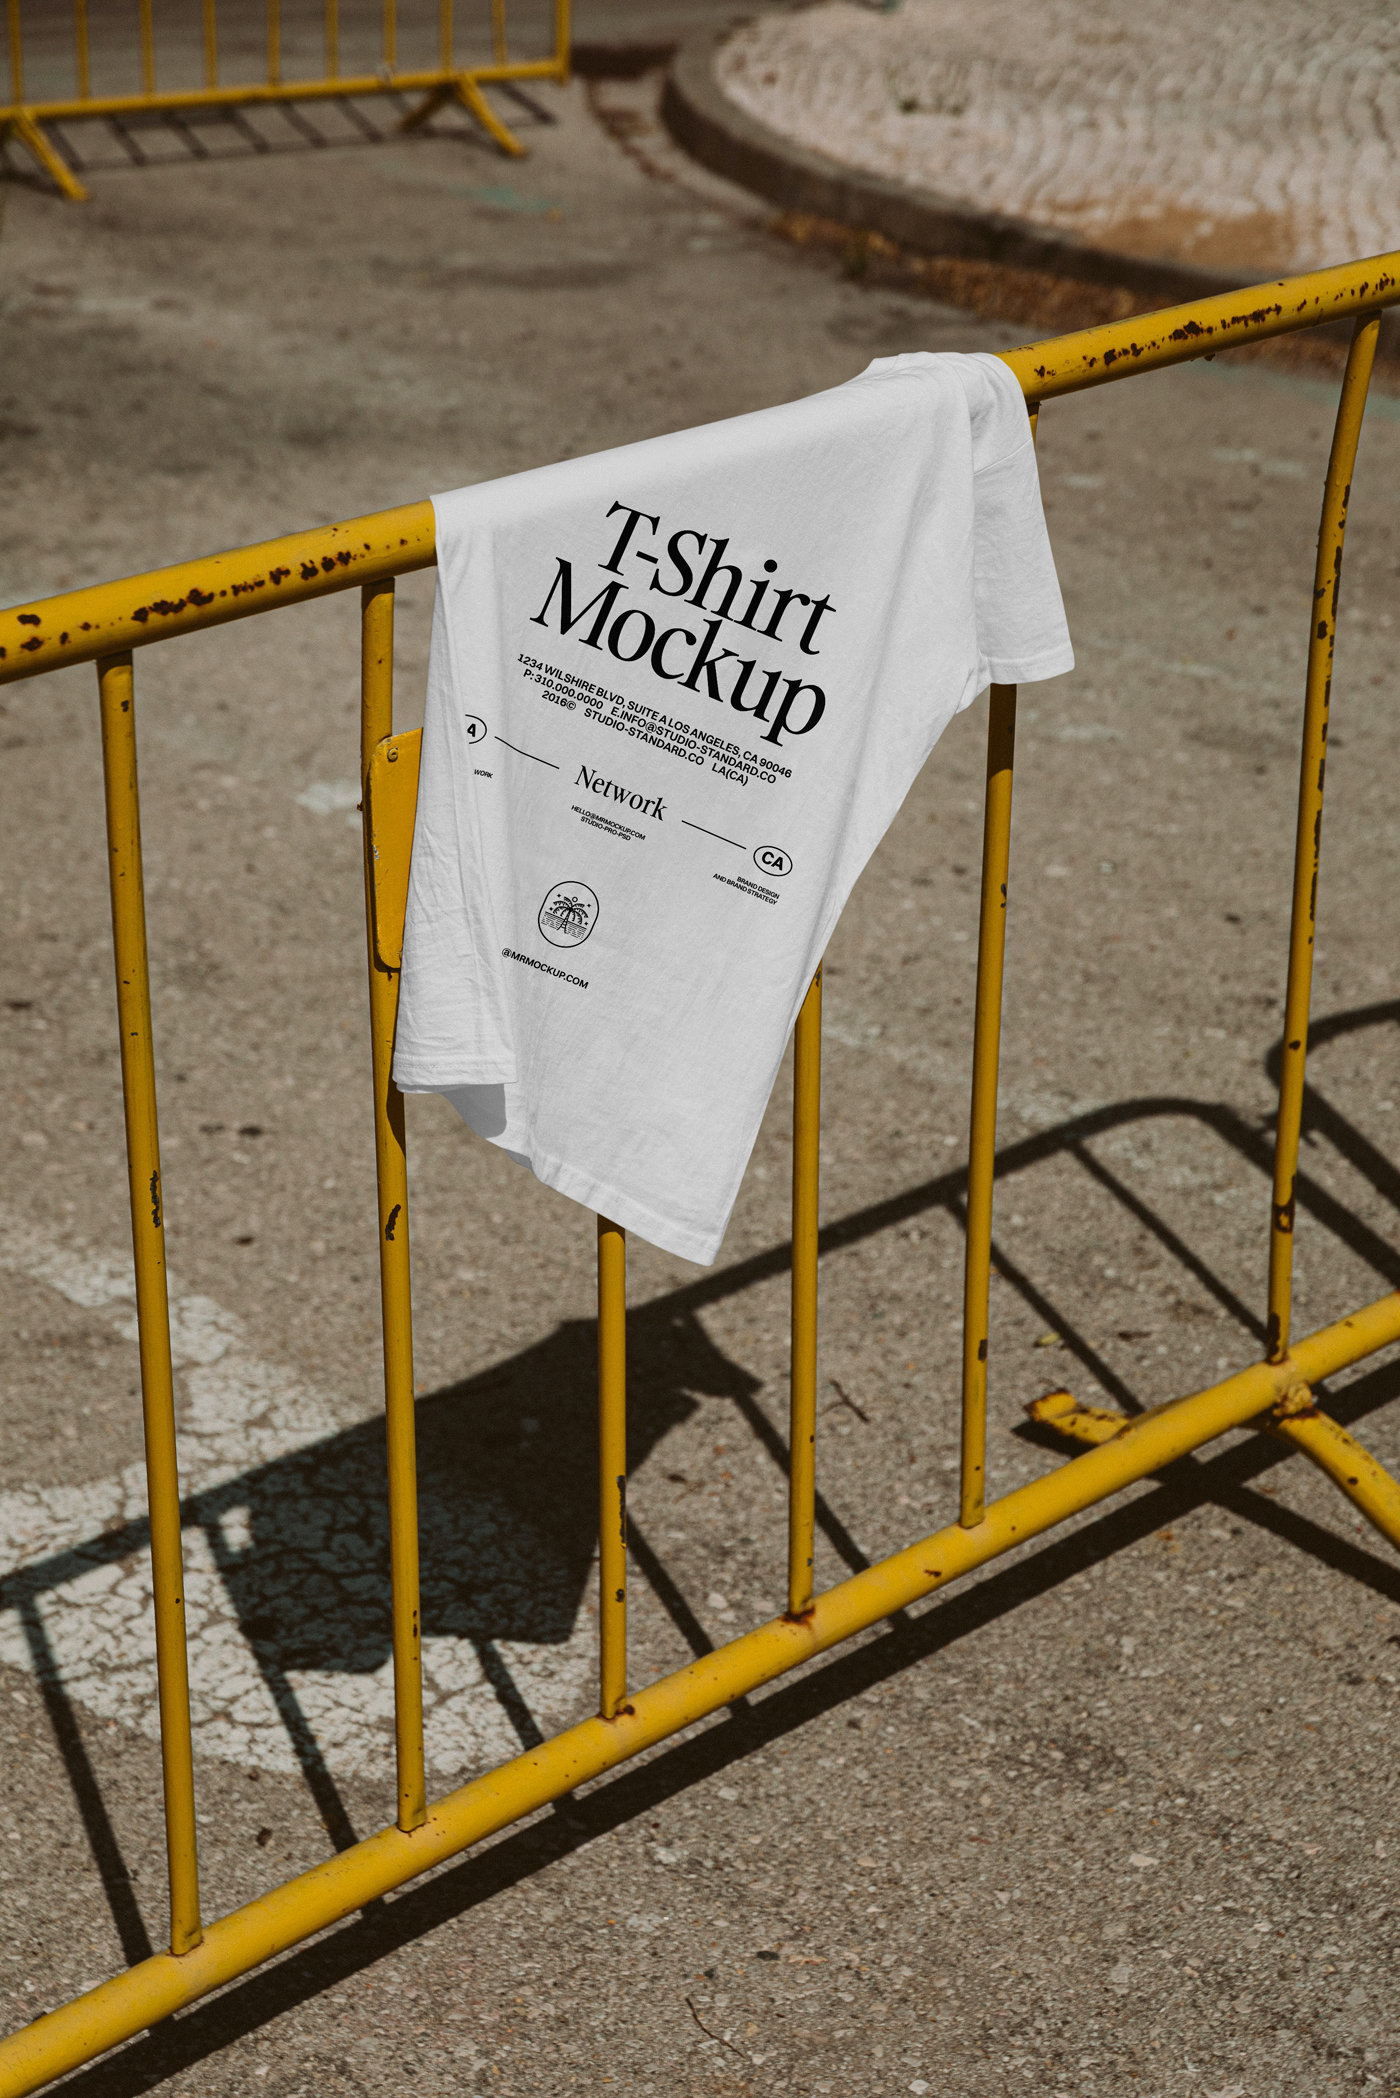 Free T-Shirt Mockup on Street PSD